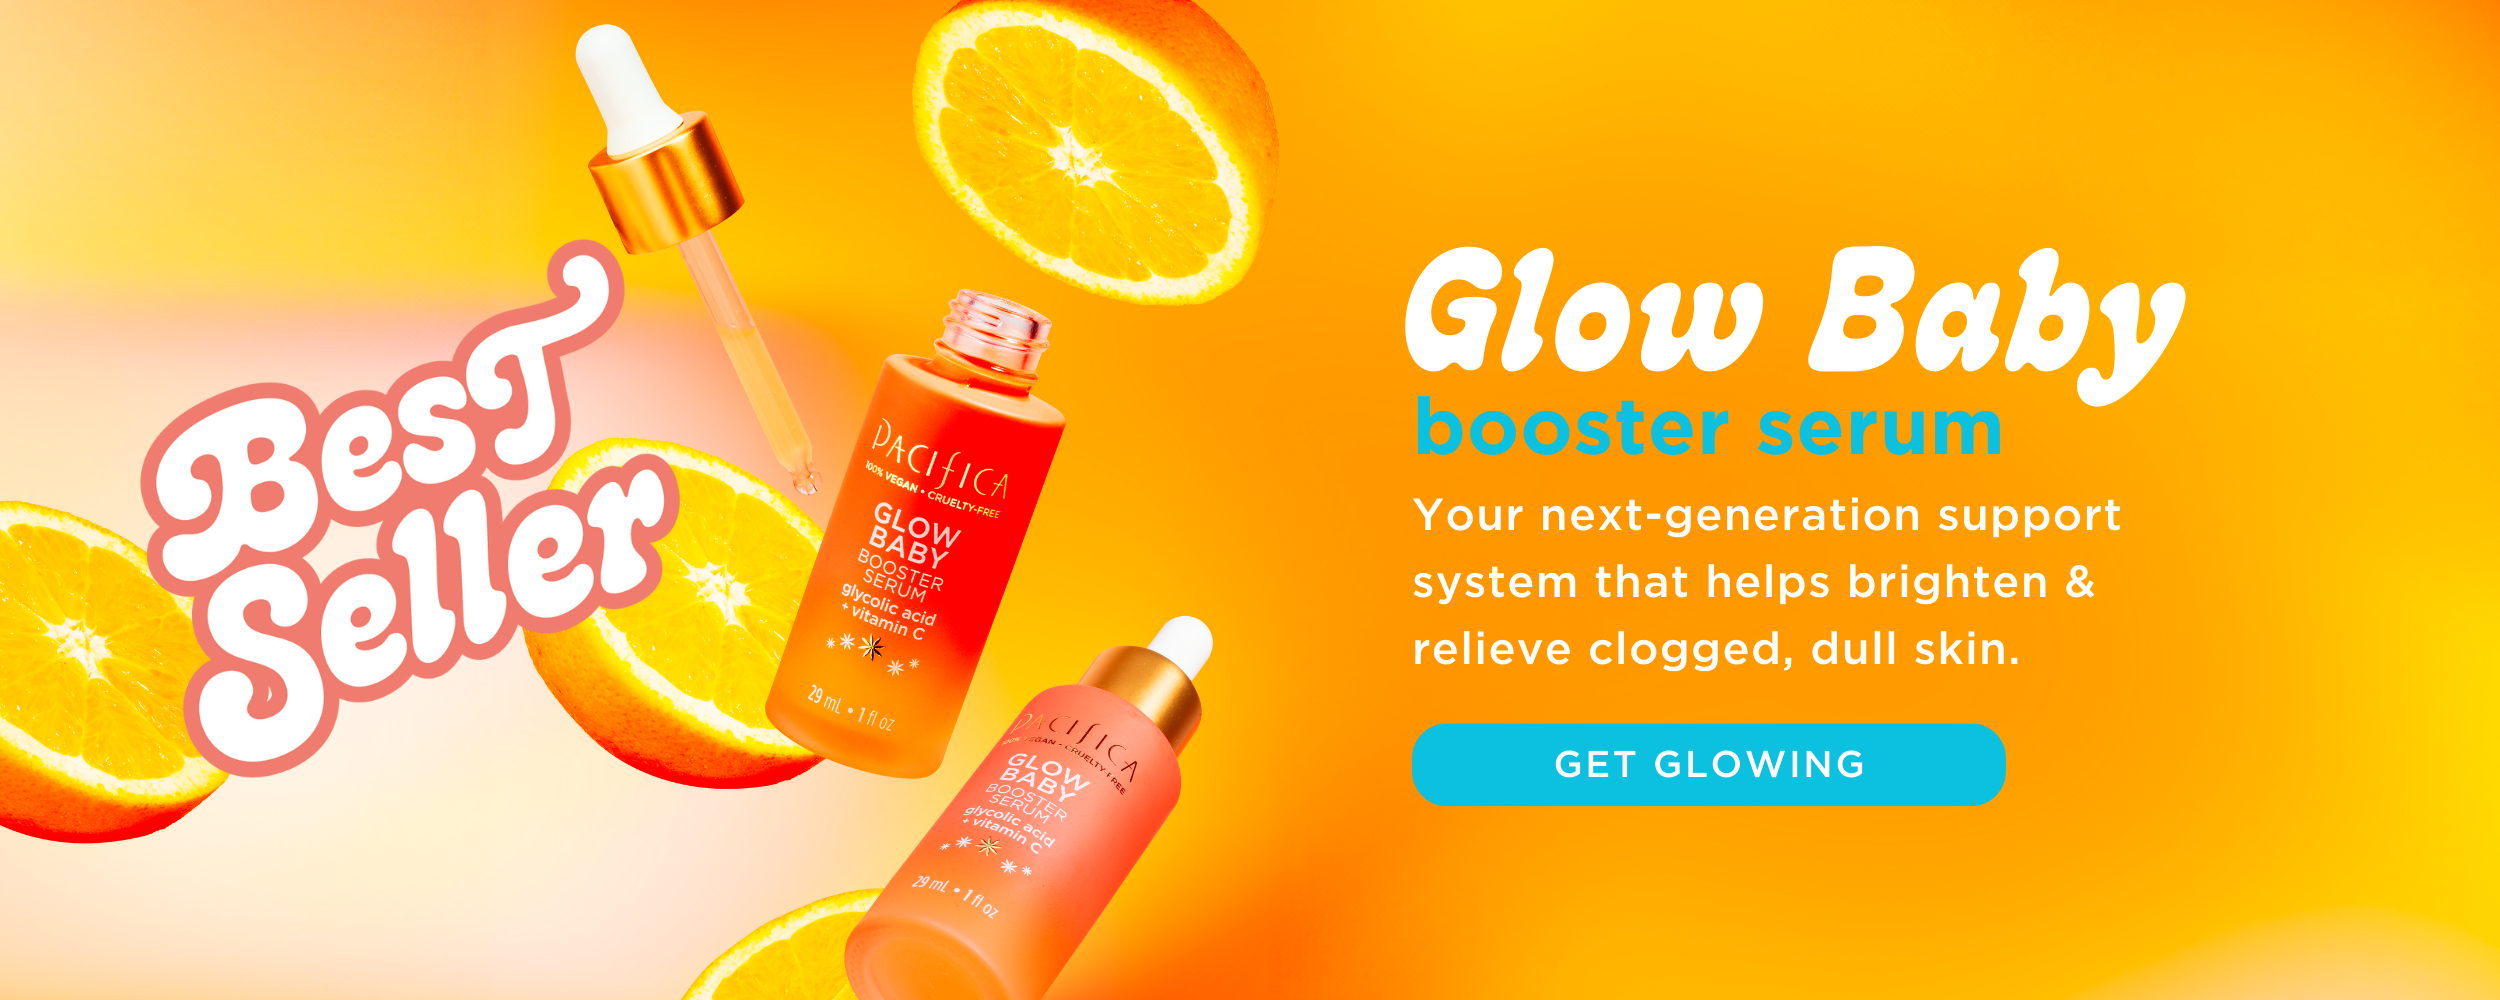 BEST SELLER Glow Baby Booster Serum. Next-gen support system to brighten & relieve clogged, dull skin. Get Glowing!